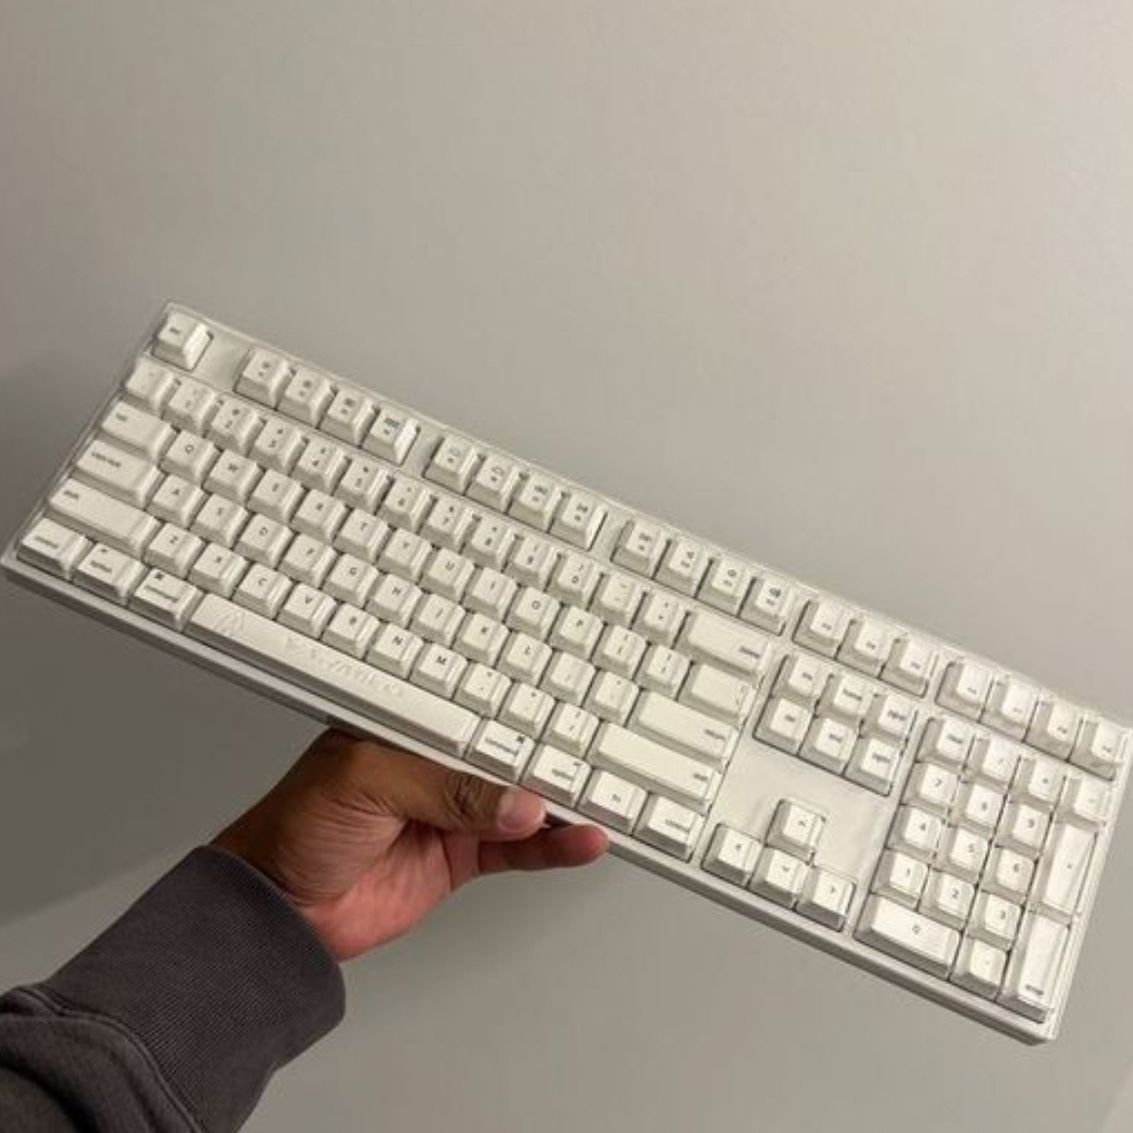 Varmilo Keyboard